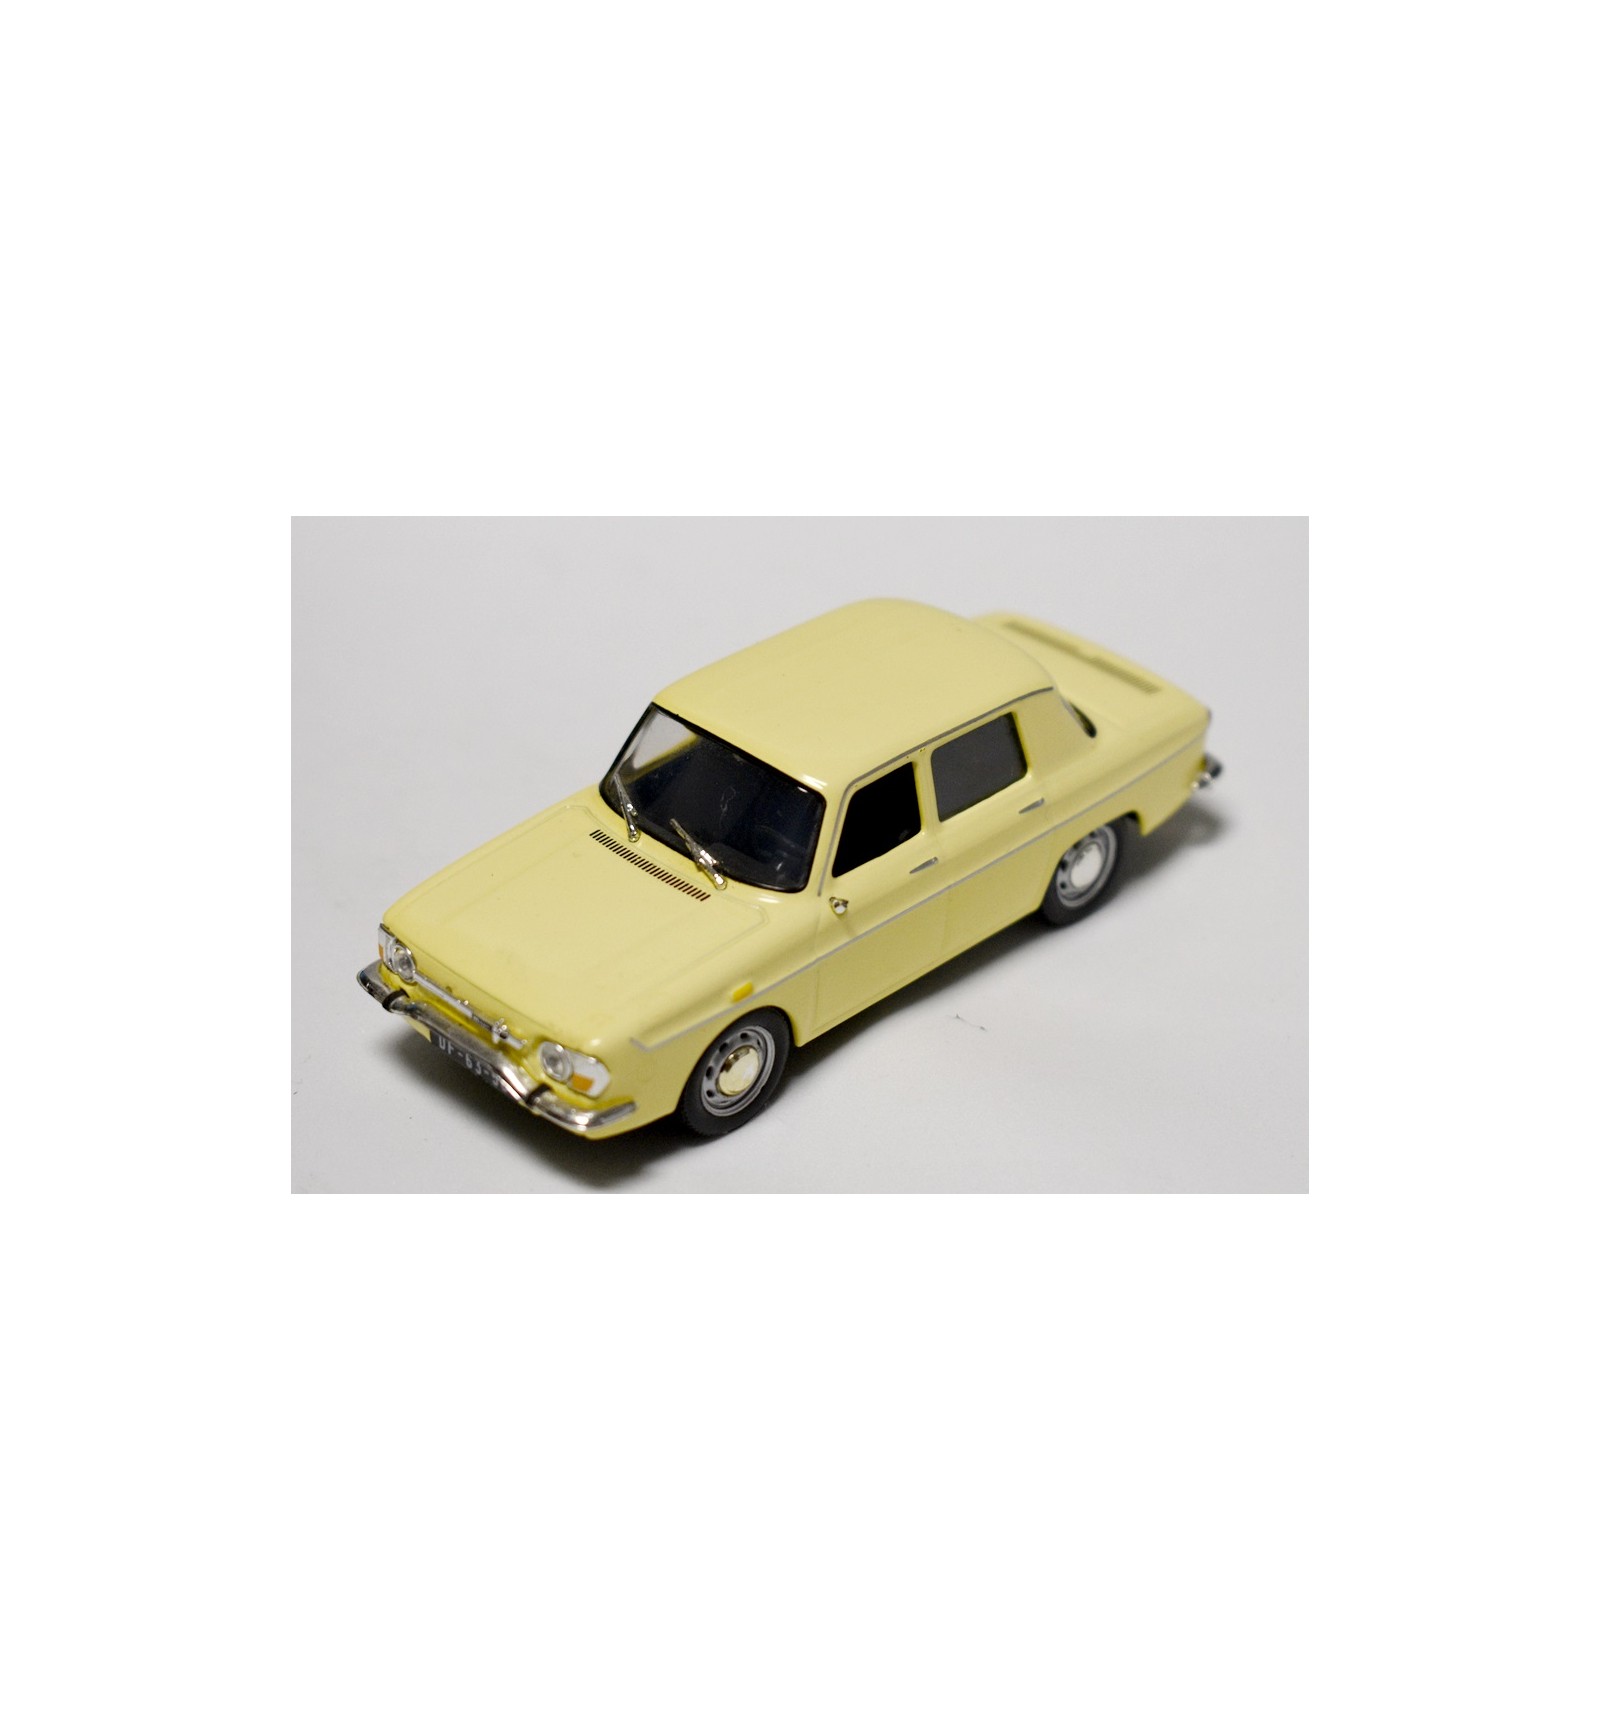 Norev Retro - Mini Collection Car - Renault R8 Yellow